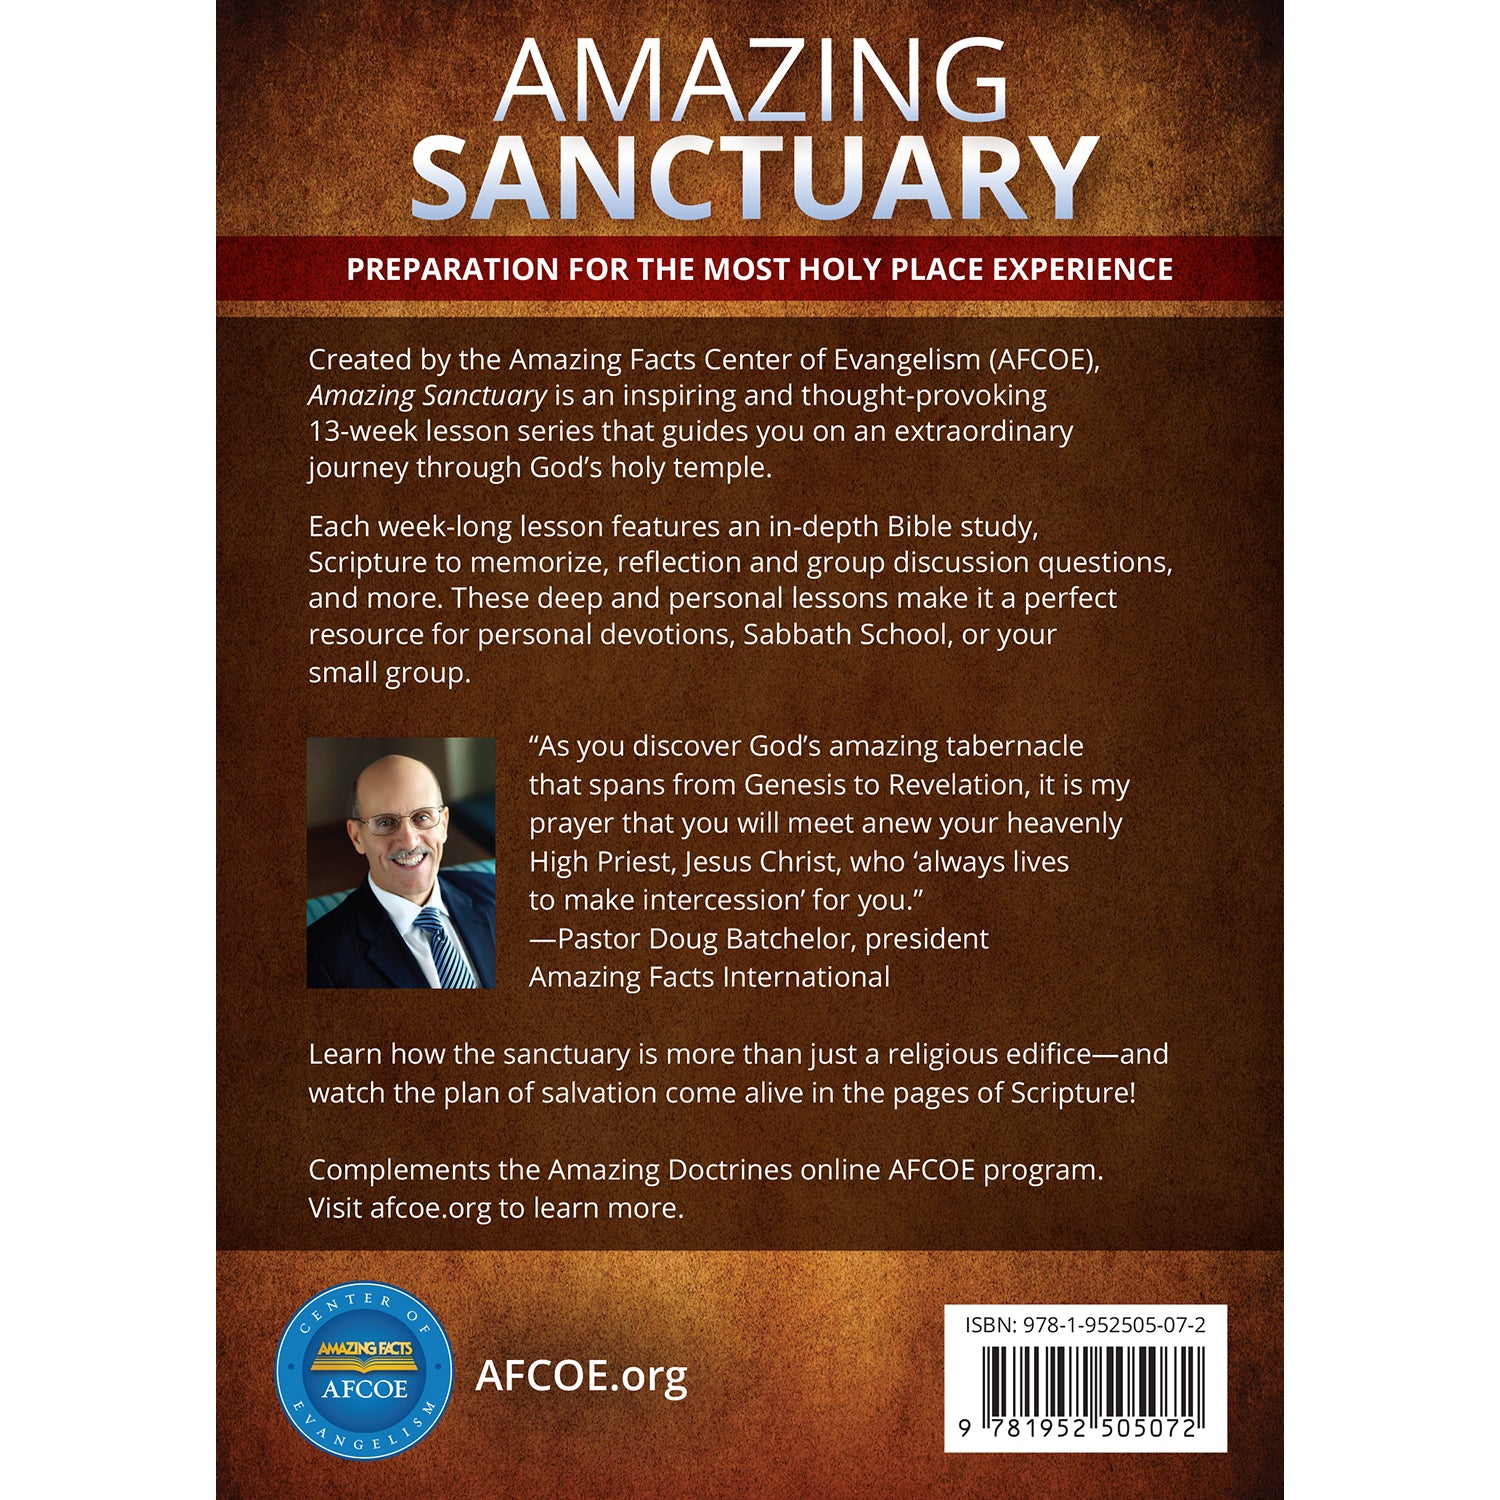 Amazing Sanctuary by Amazing Facts